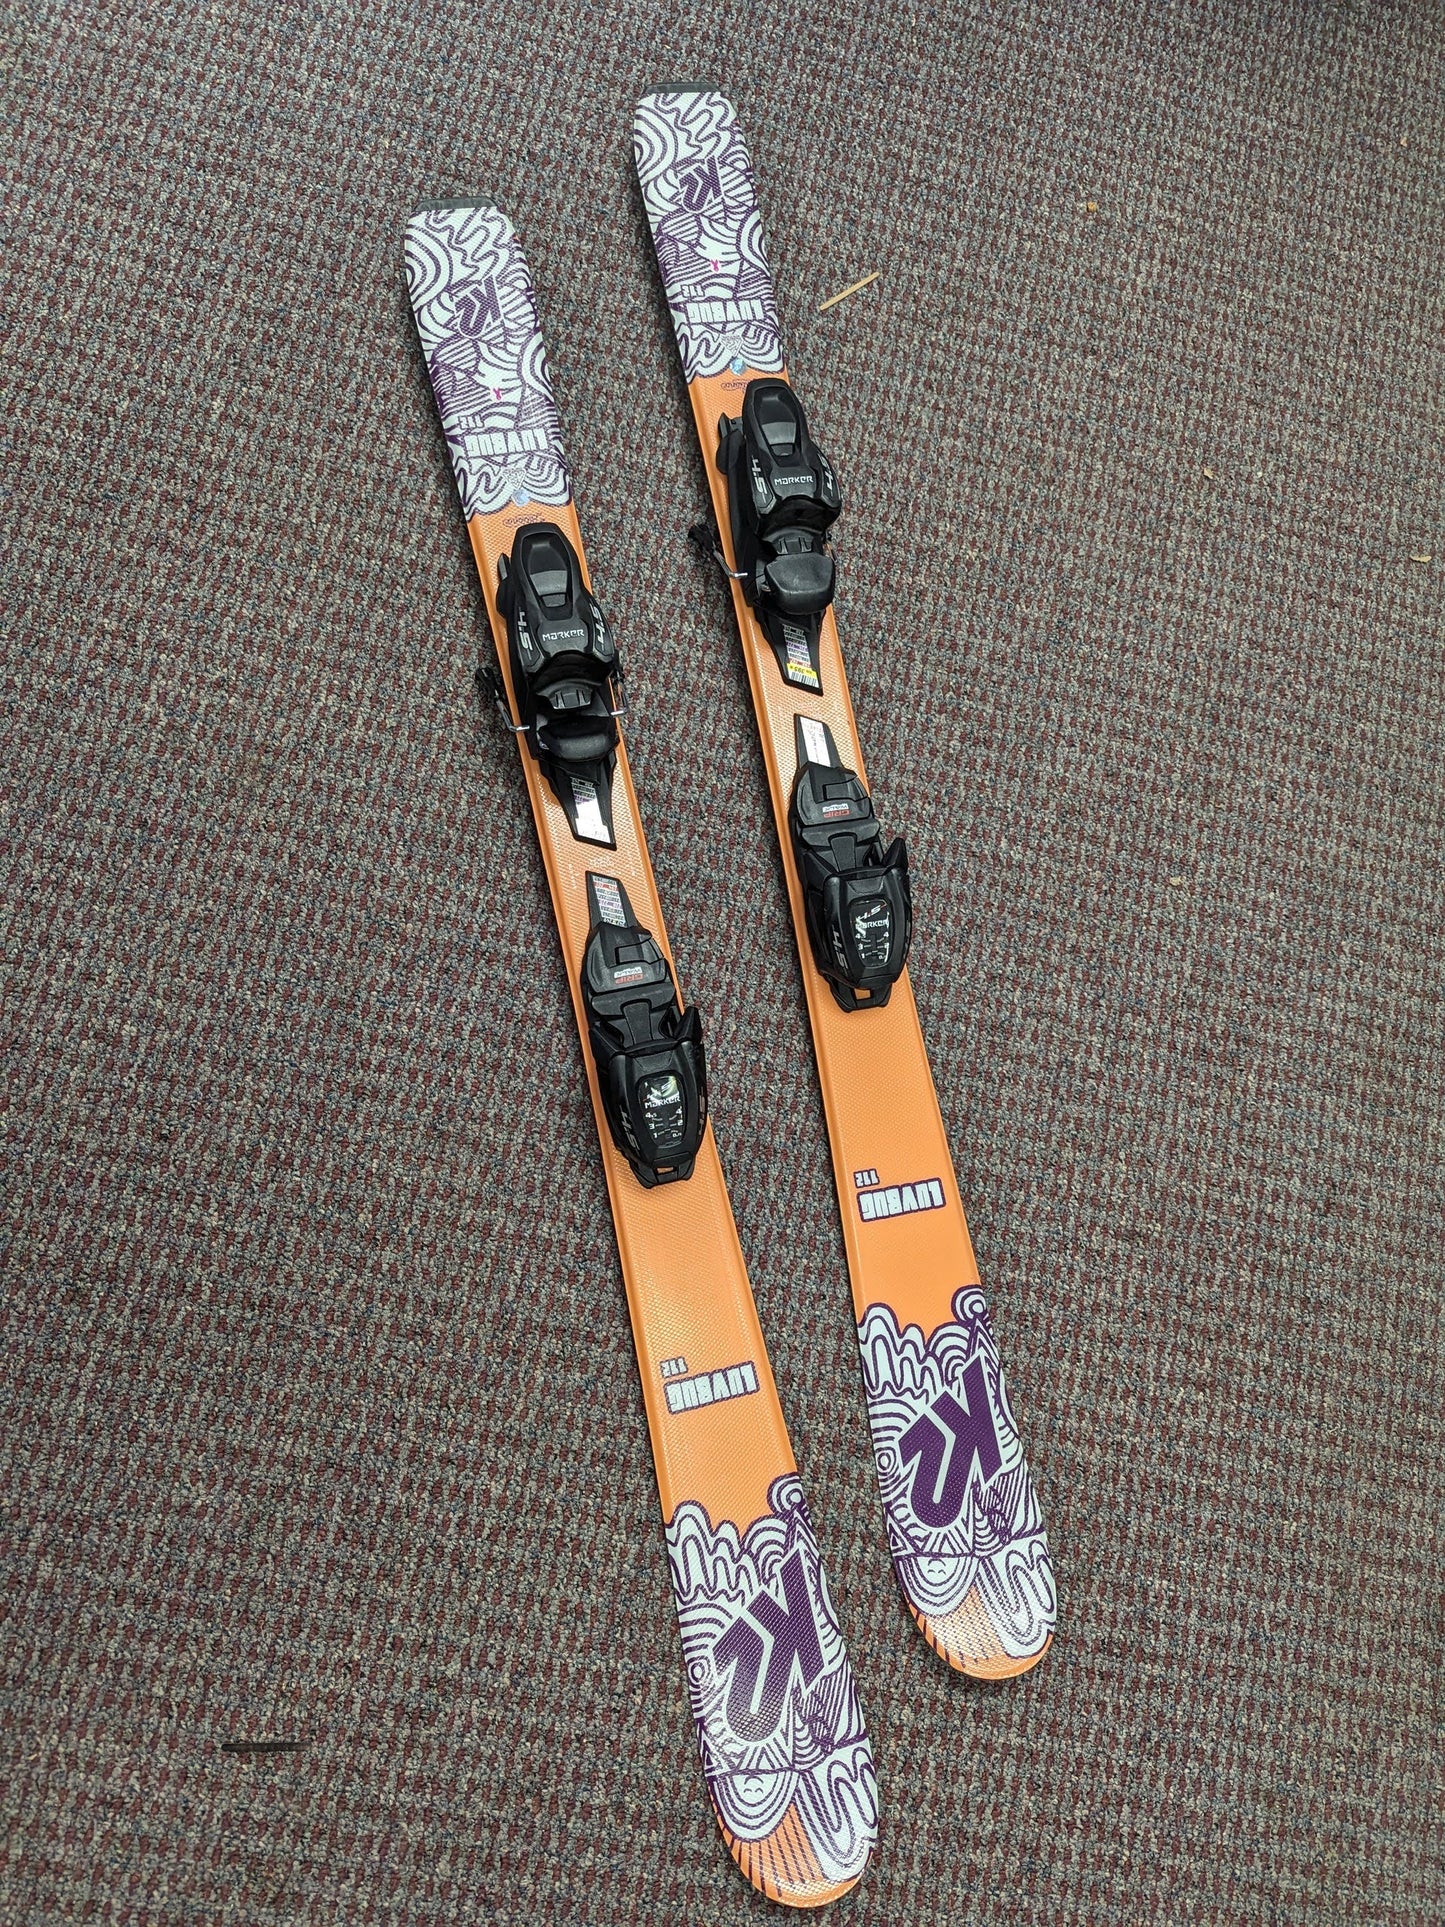 Luv Bug Skis w/Marker 4.5 Bindings Size 112 Cm Color Peach Condition Used Luvbug GripWalk Grip Walk Alliance